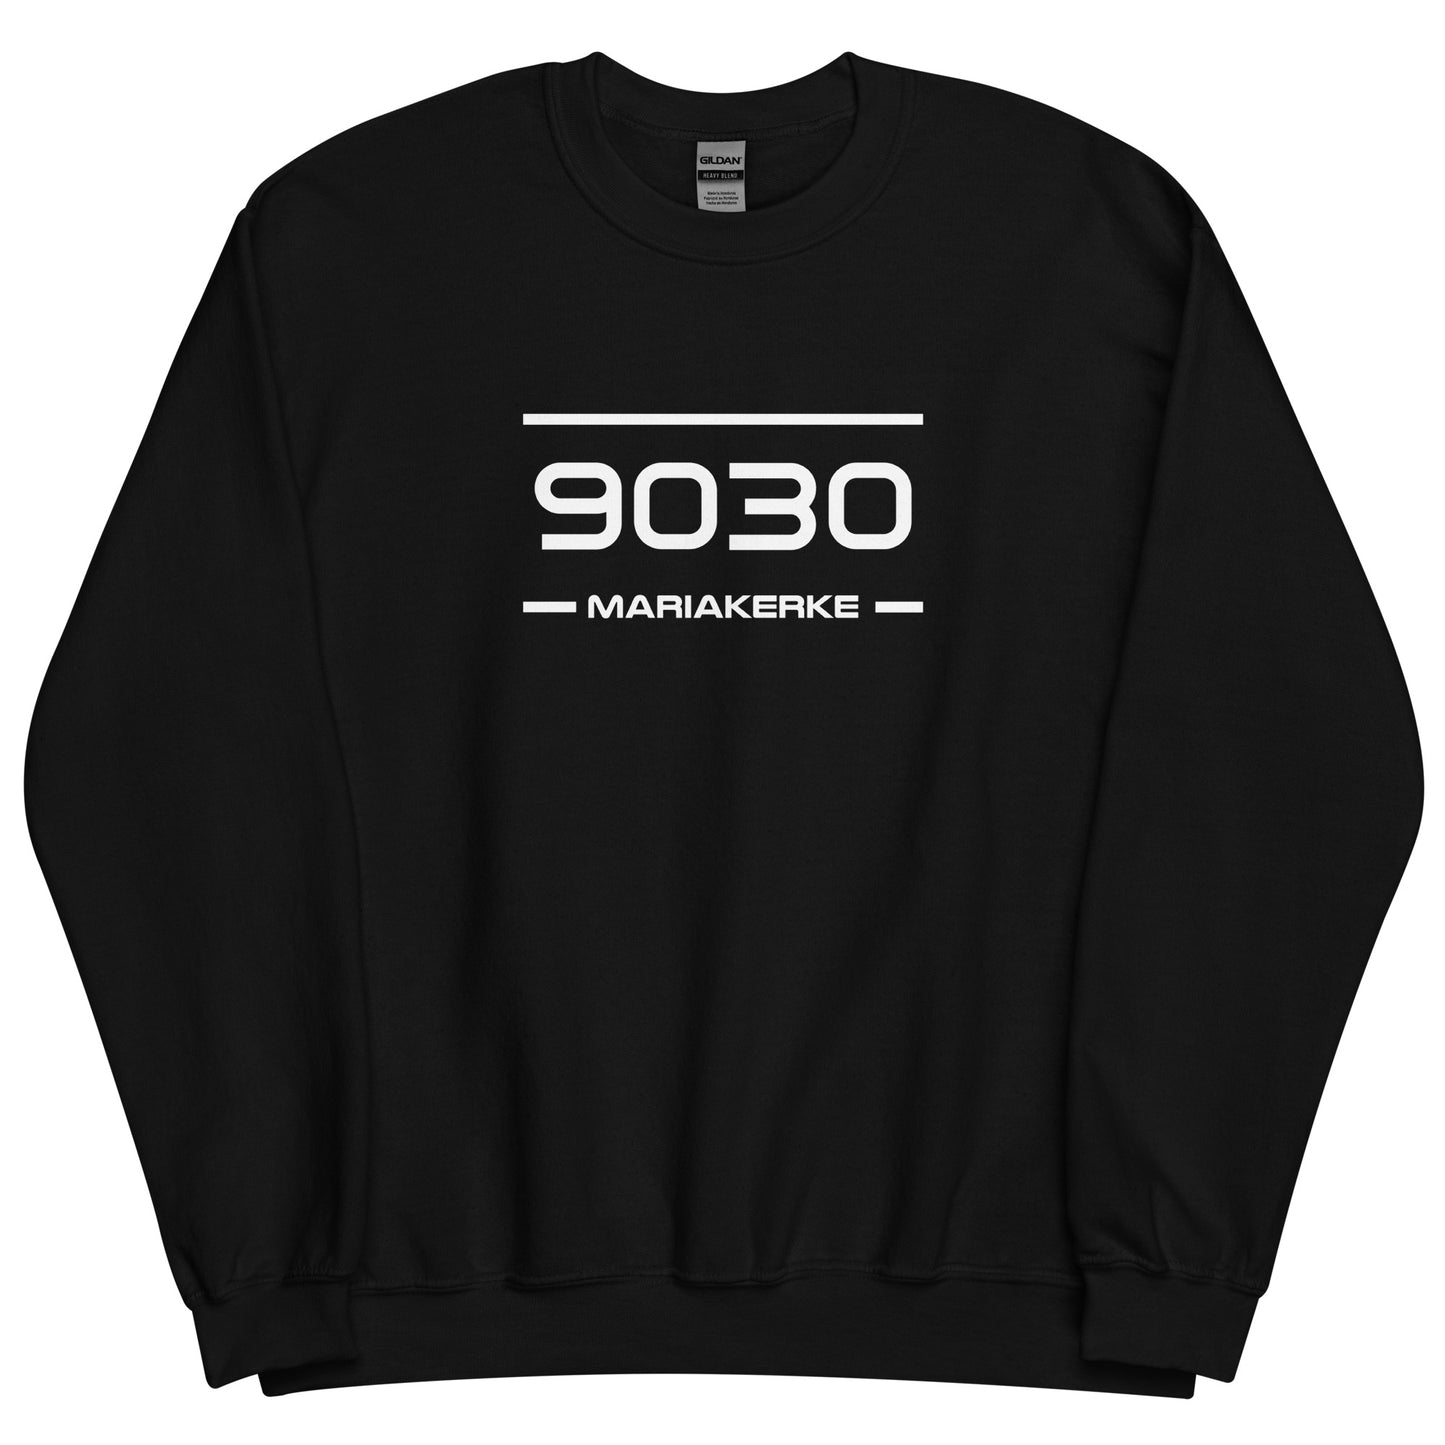 Sweater - 9030 - Mariakerke (M/V)